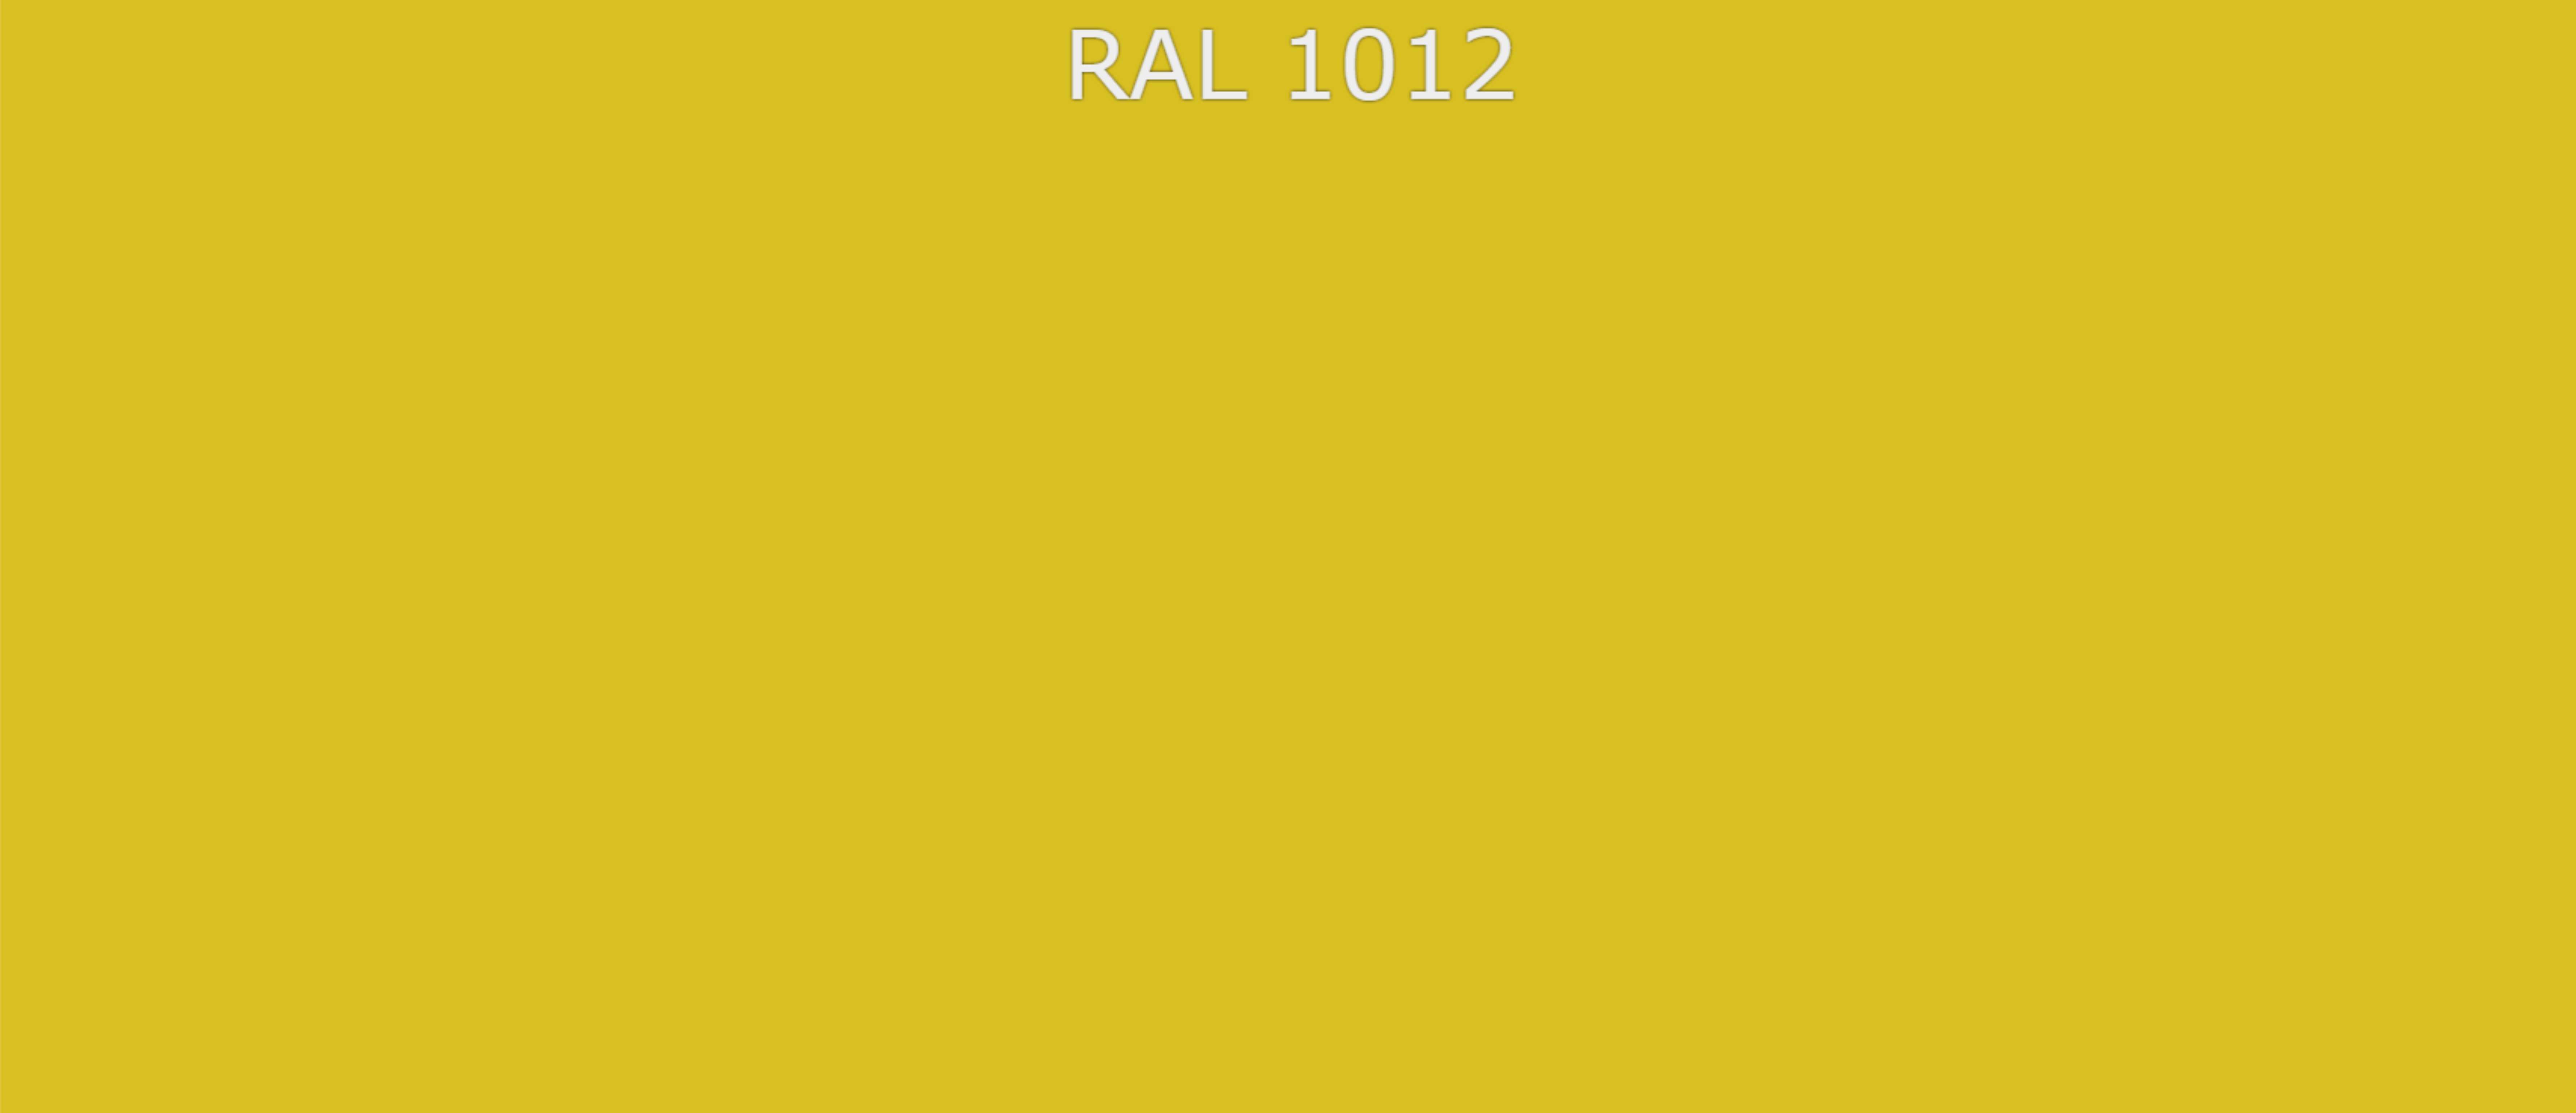 Алюминий имеет желтый цвет. Рал 1021 и 1023. Желтый рал 1021. Желтый цвет рал 1018. RAL 1018 И 1021.